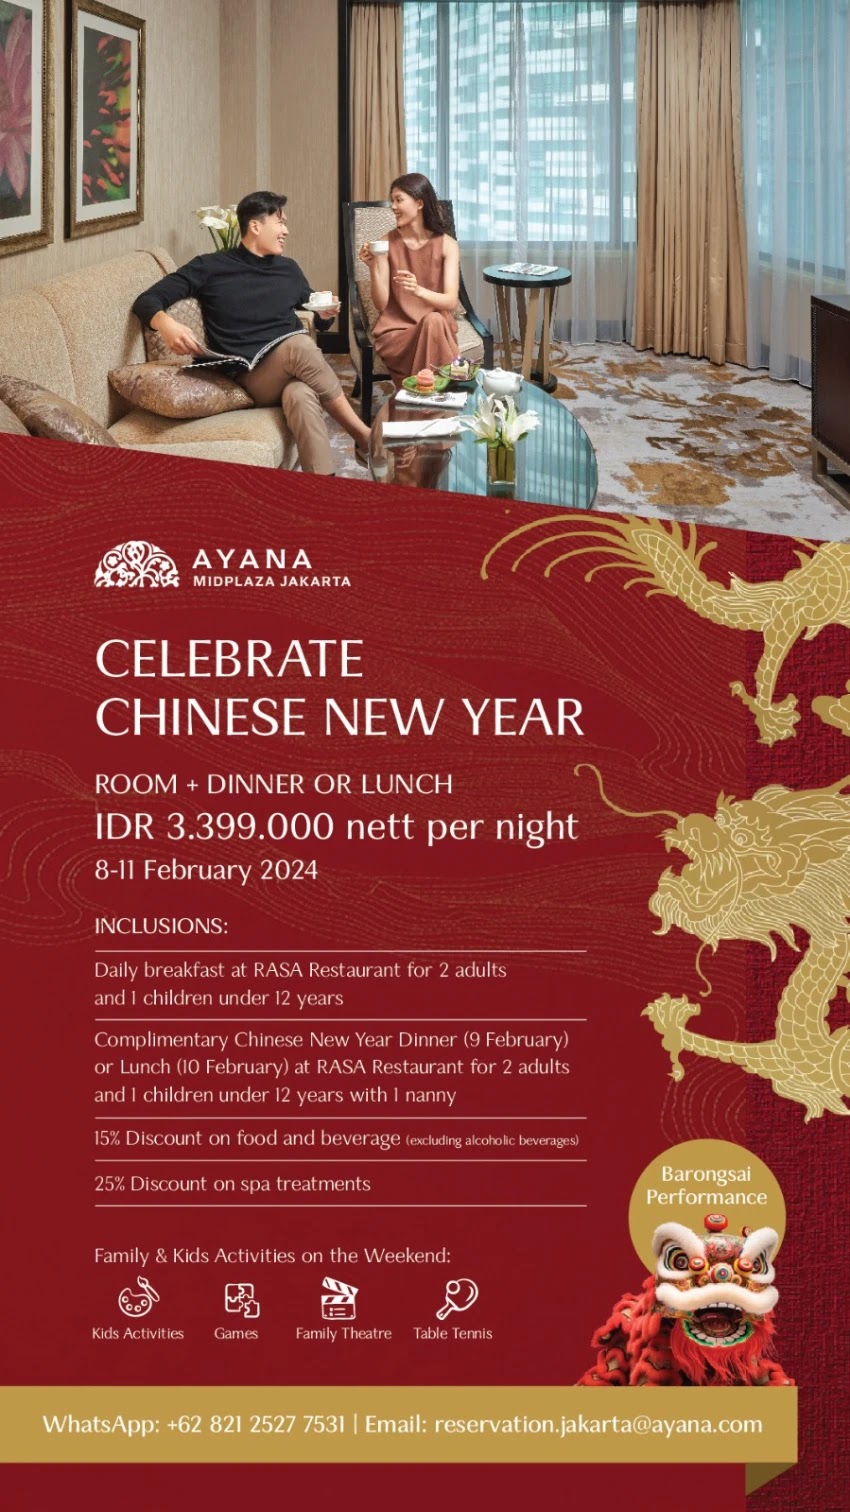 AYANA Midplaza Jakarta Presents Exquisite Chinese New Year Celebration